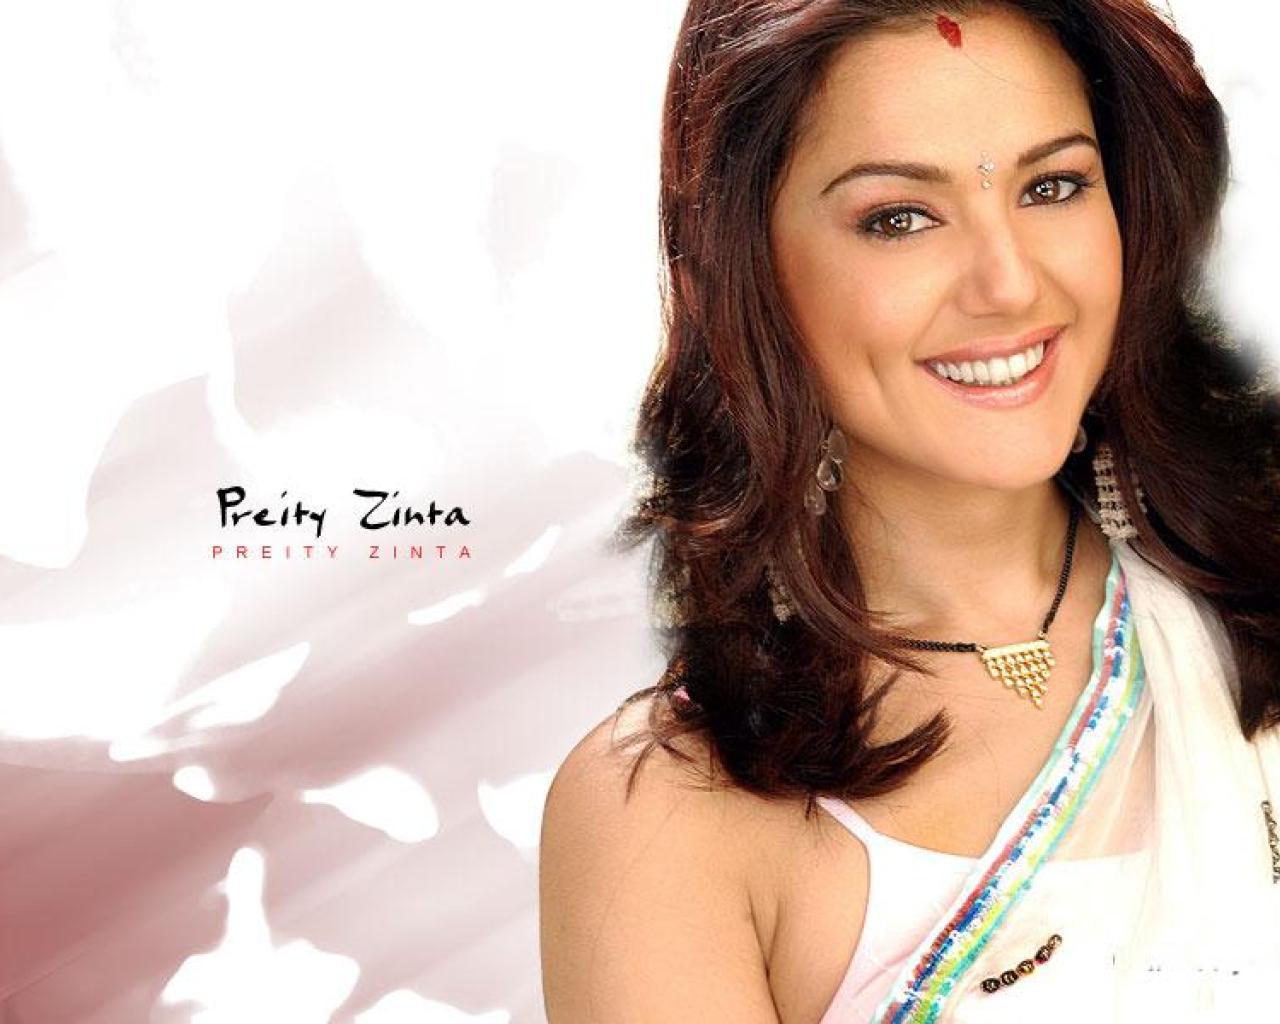 Download Free Hd Wallpapers Of Preity Zinta ~ Download Free Hd Wallpapers Collection